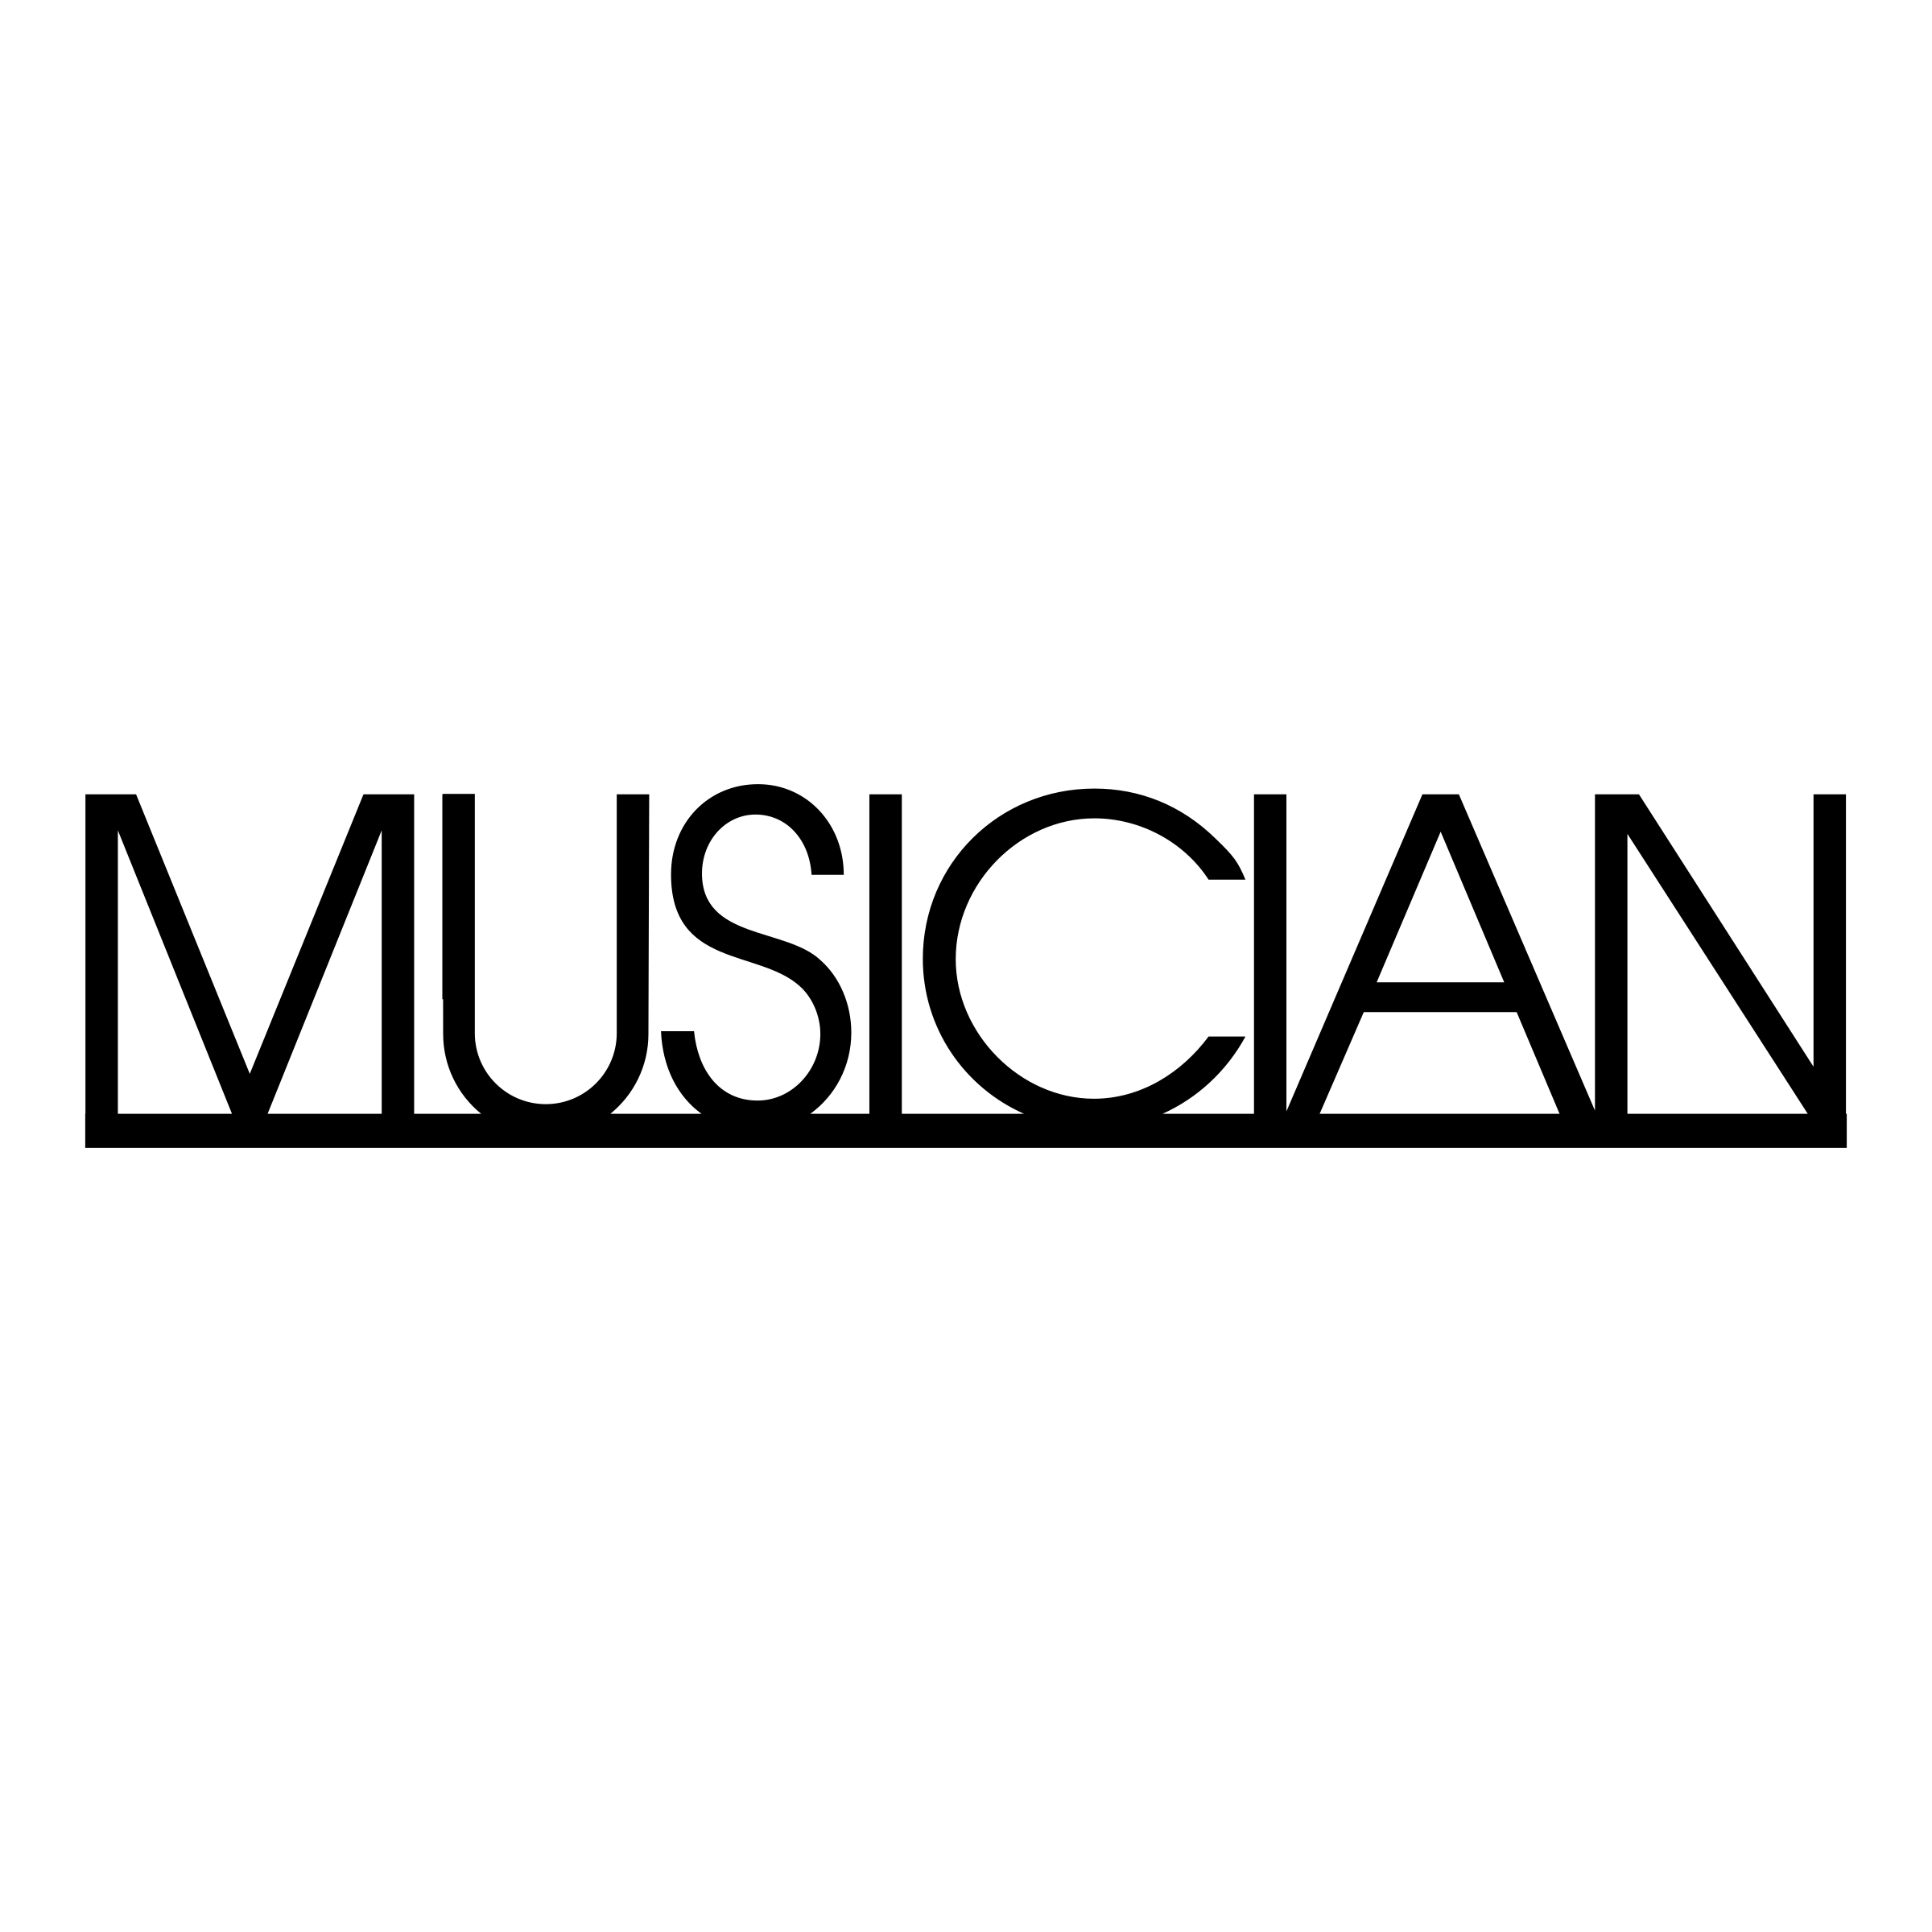 Musician Logo - Musician Logo PNG Transparent & SVG Vector - Freebie Supply